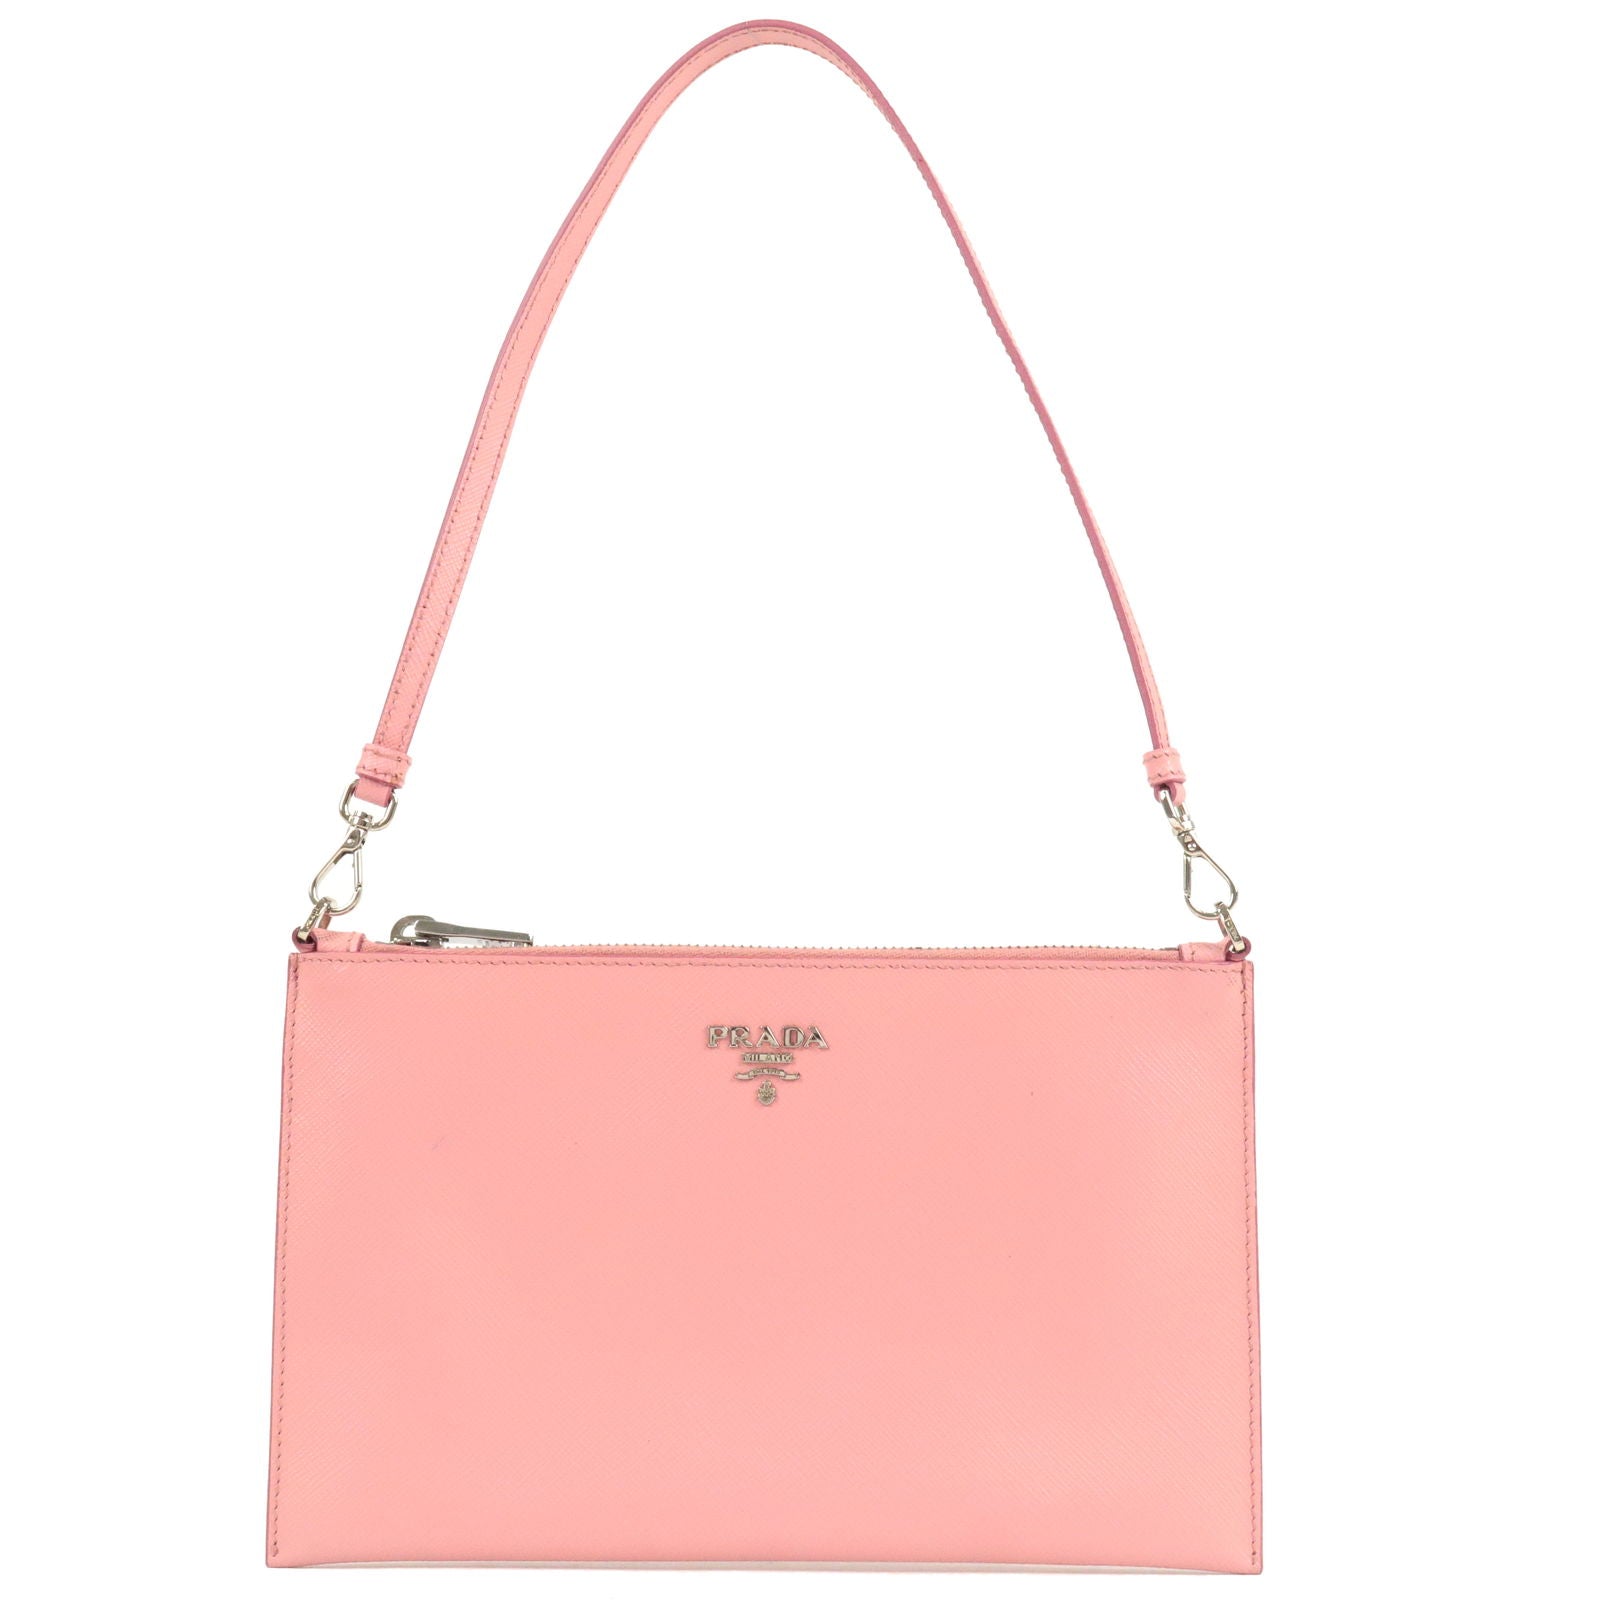 Pouch - Bag - ep_vintage luxury Store - Pink - PETARO - Prada crystal-embellished  logo pendant earring Silber - Logo - 1NH004 – dct - PRADA - Leather -  Shoulder